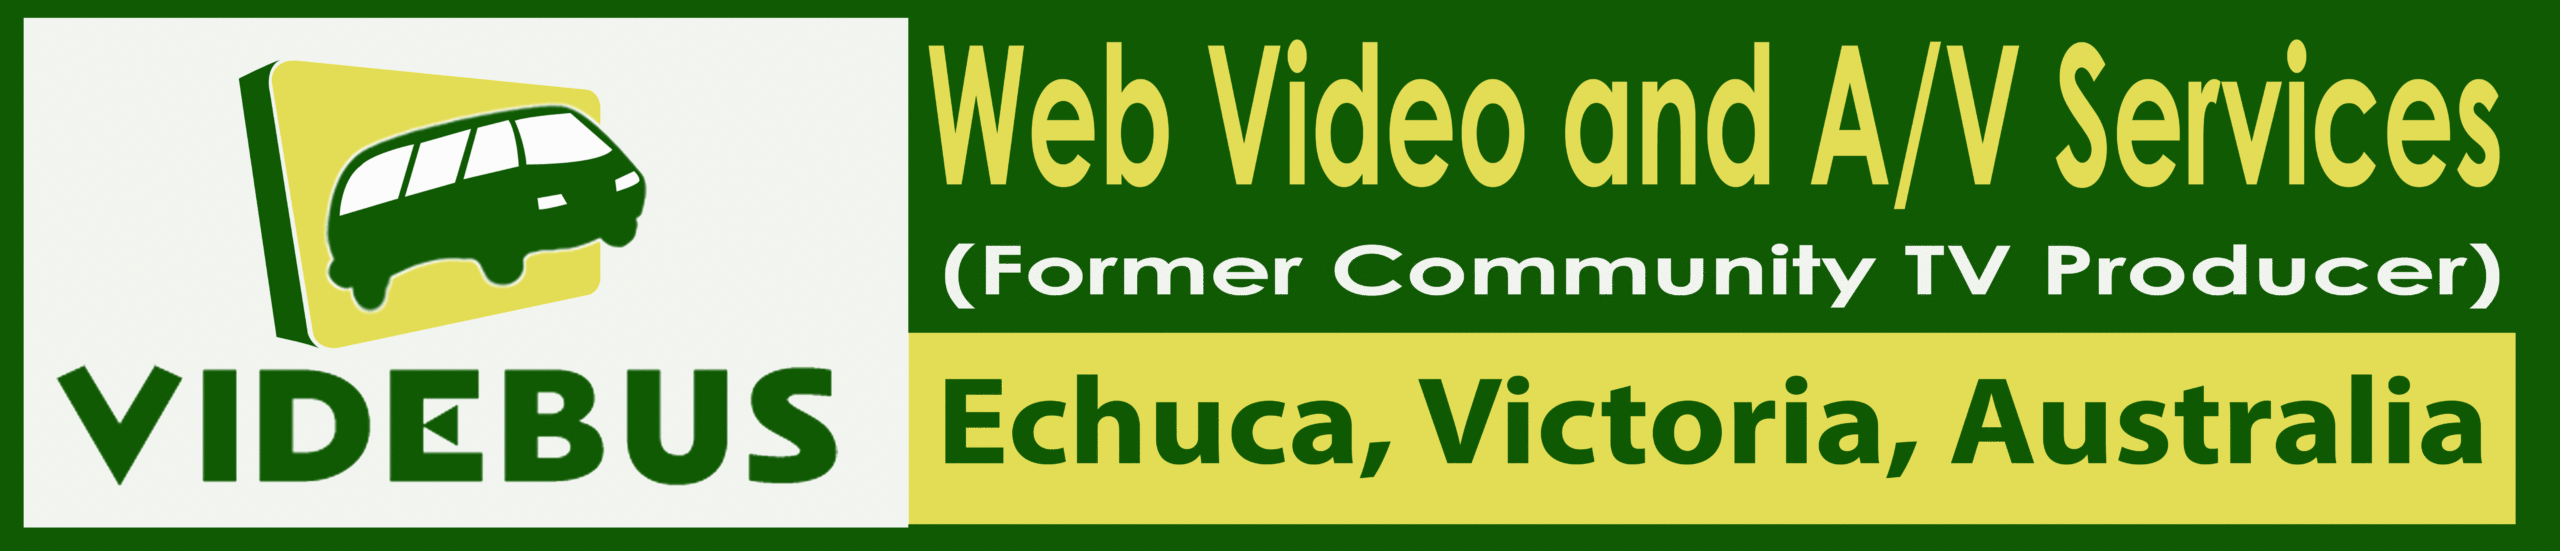 VideBus – Web Video and A/V Services – Echuca, Vic, Australia.